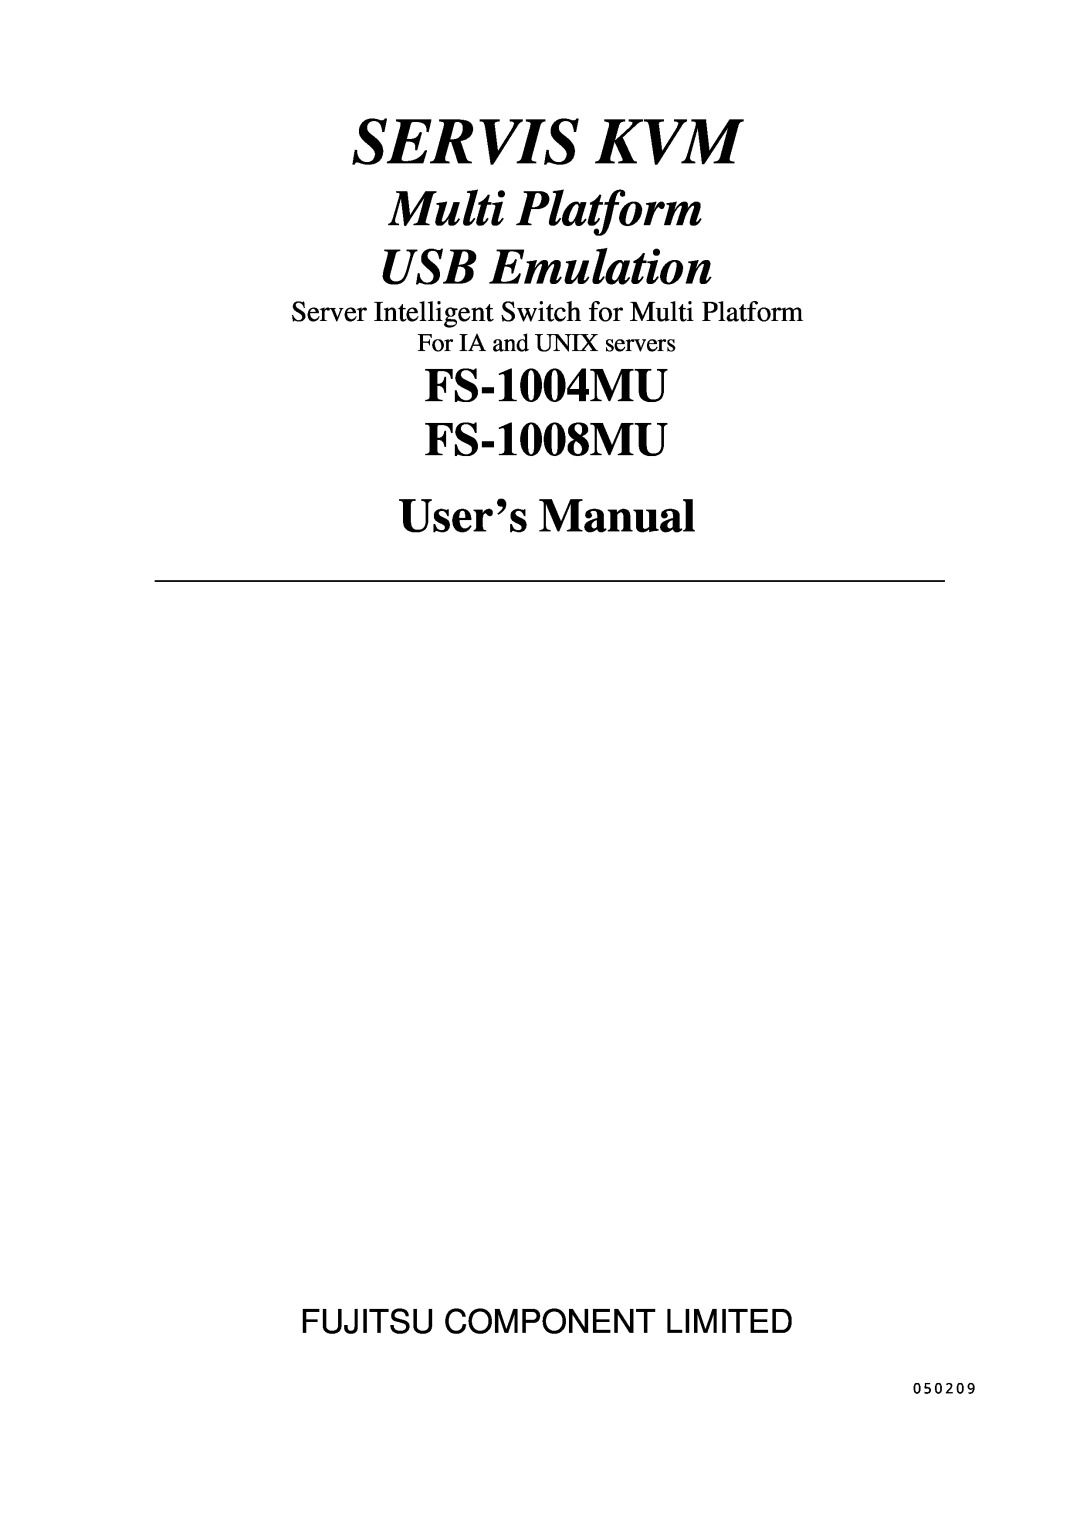 Fujitsu user manual Servis Kvm, Multi Platform USB Emulation, FS-1004MU FS-1008MU User’s Manual, 050209 